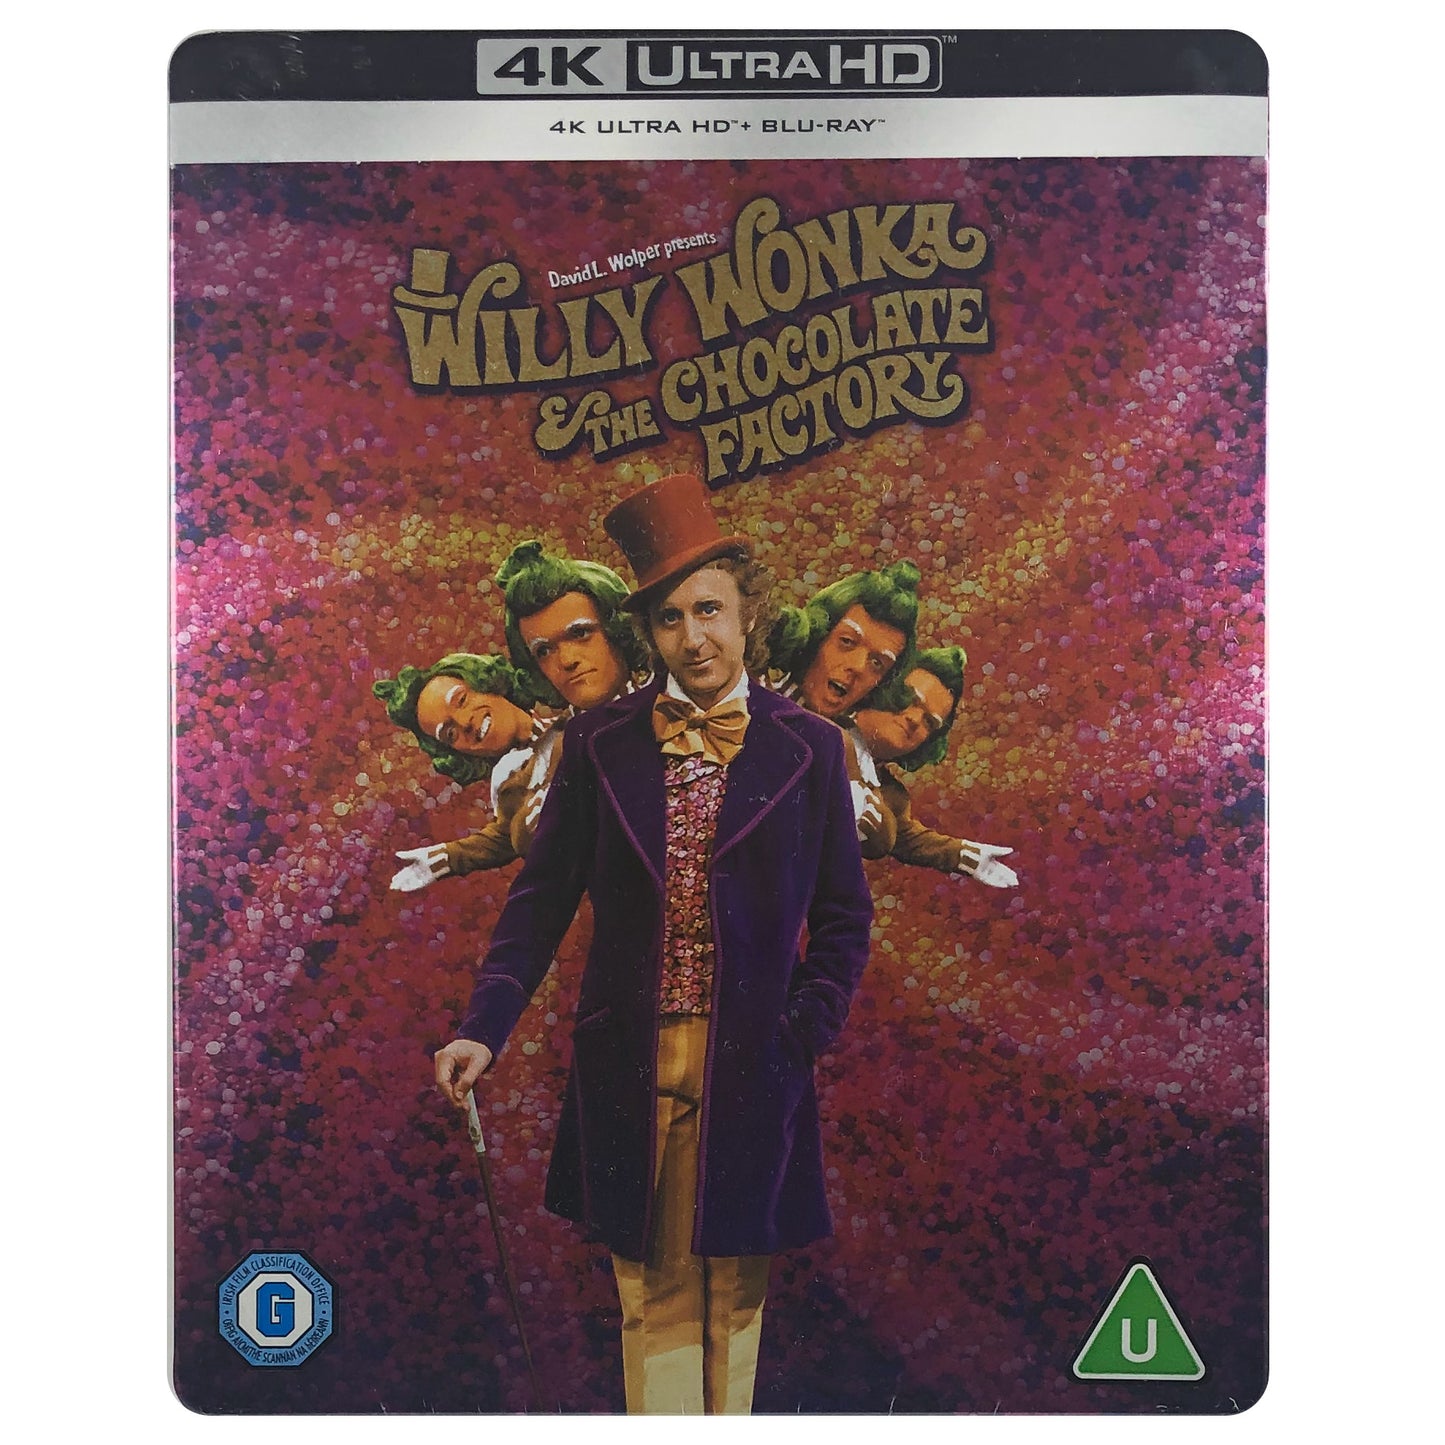 Willy Wonka & The Chocolate Factory 4K Steelbook